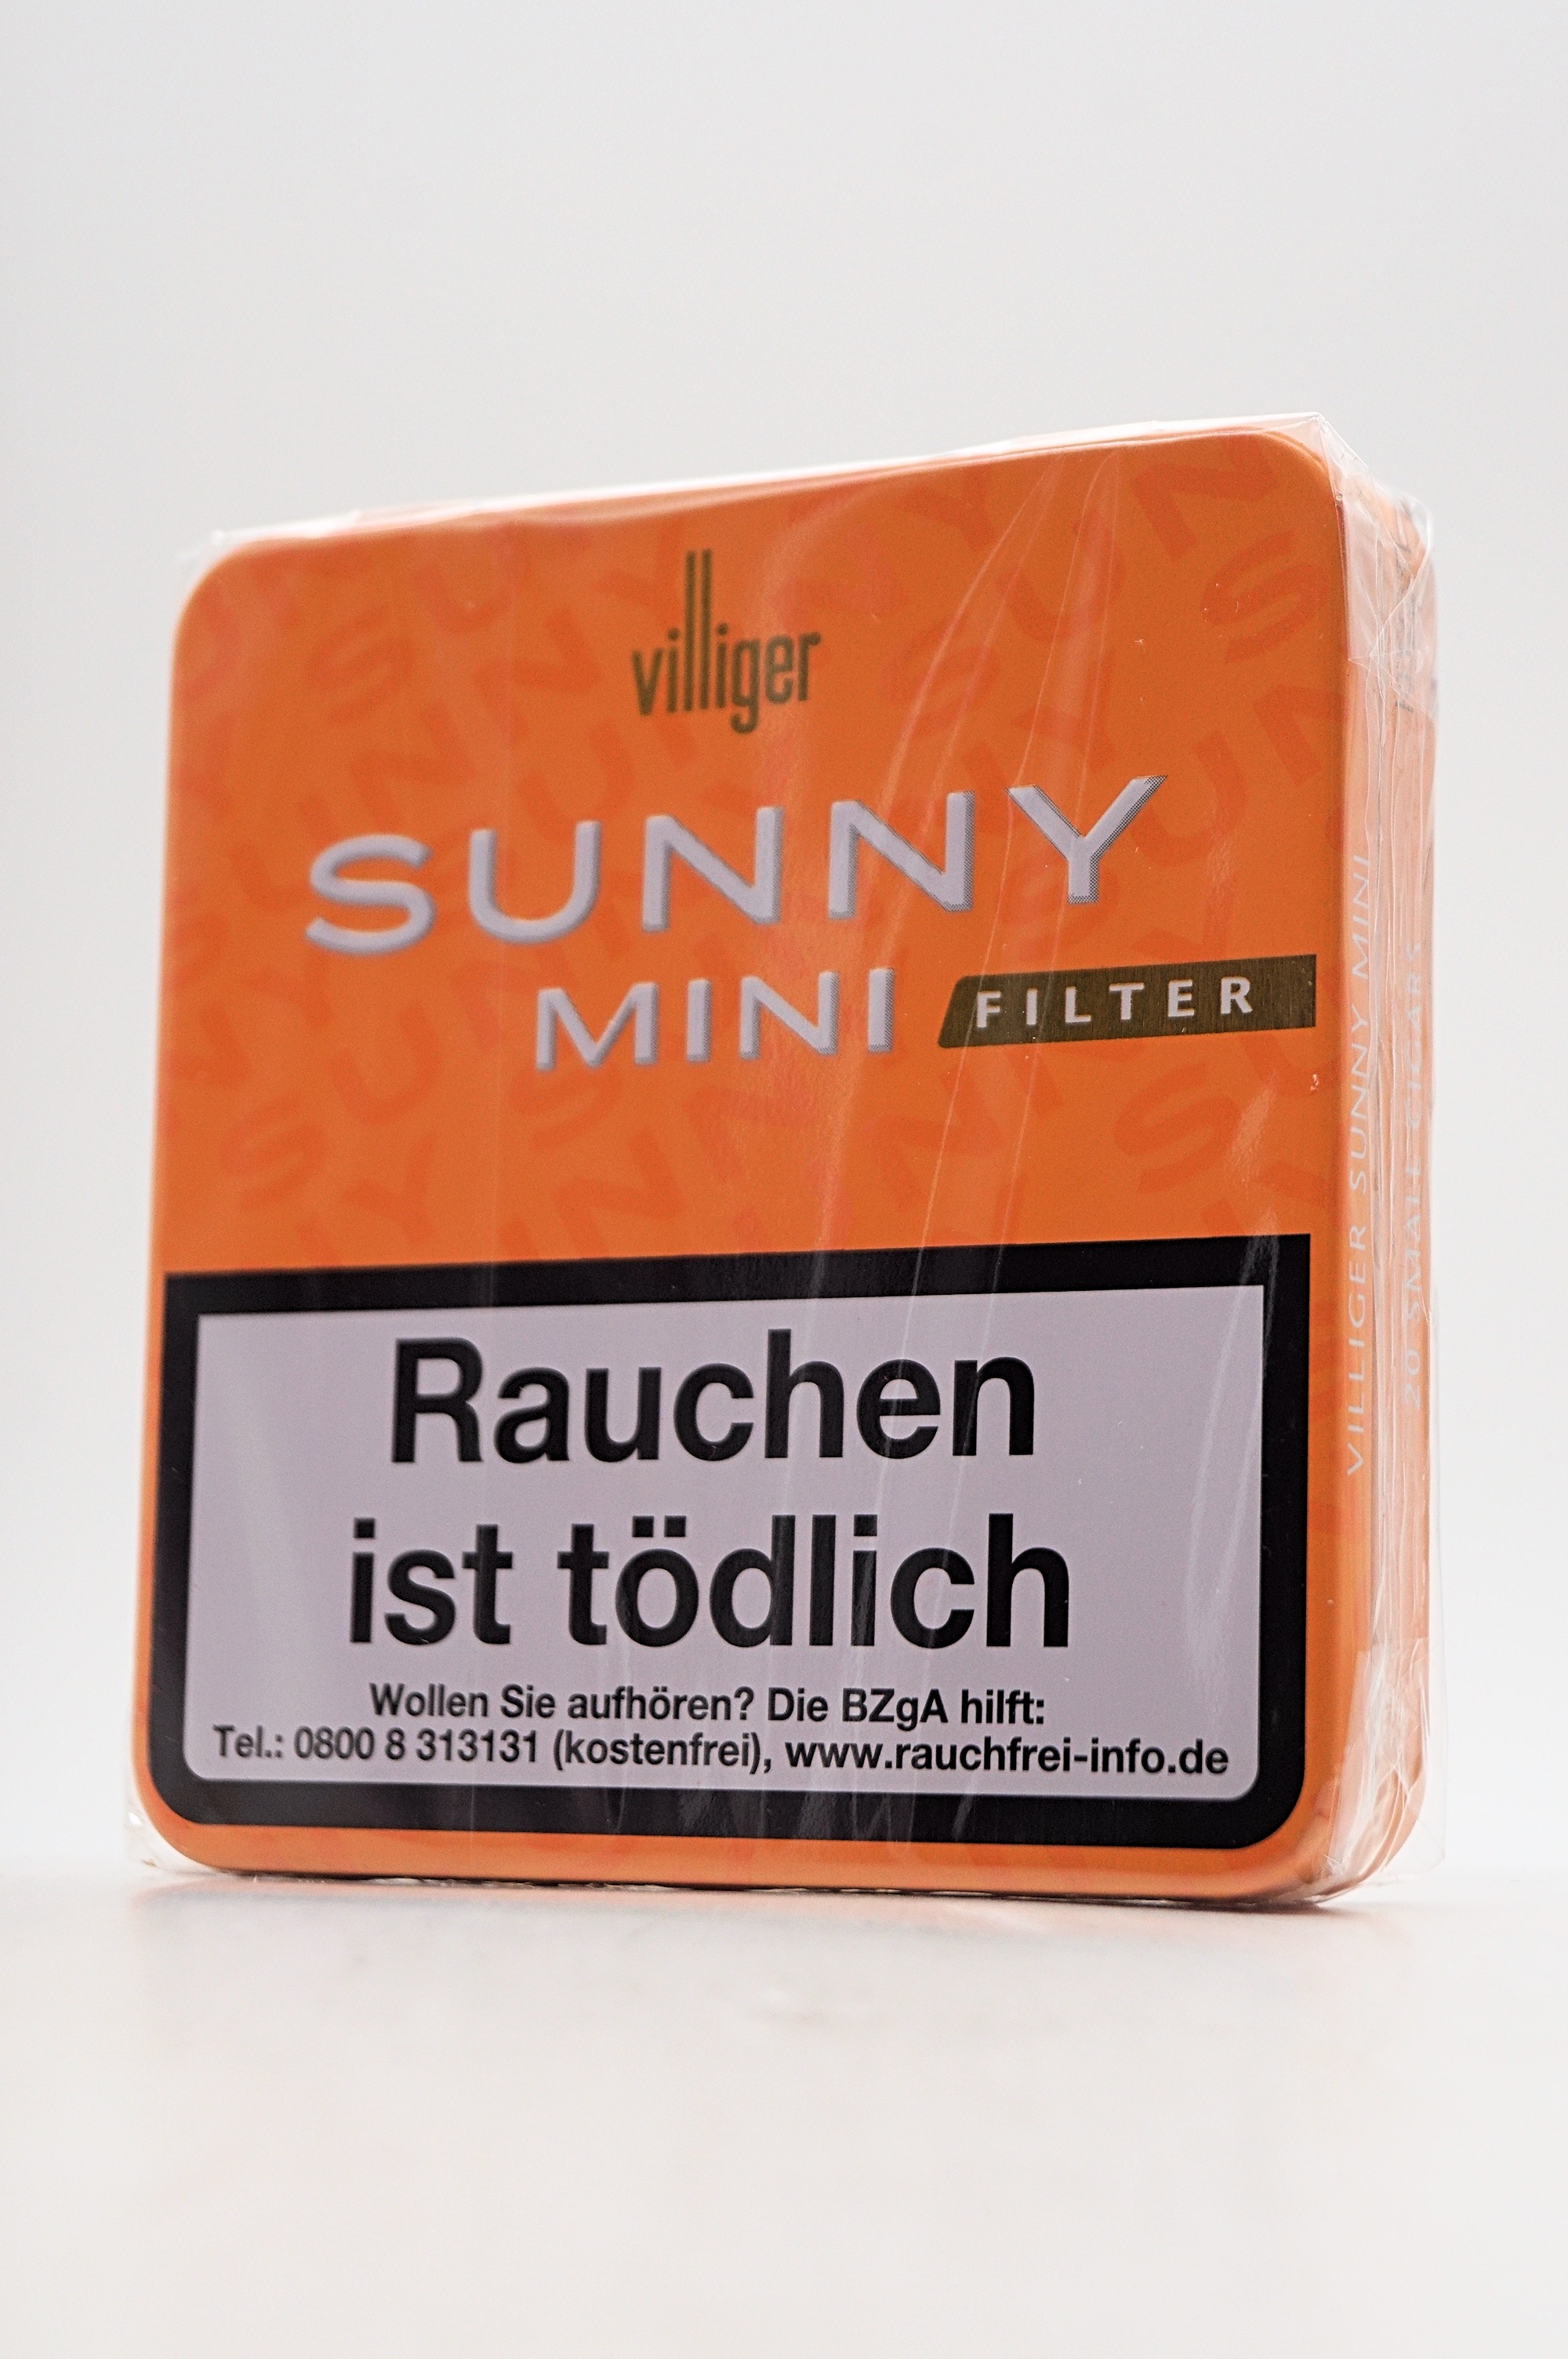 Sunny Mini Filter